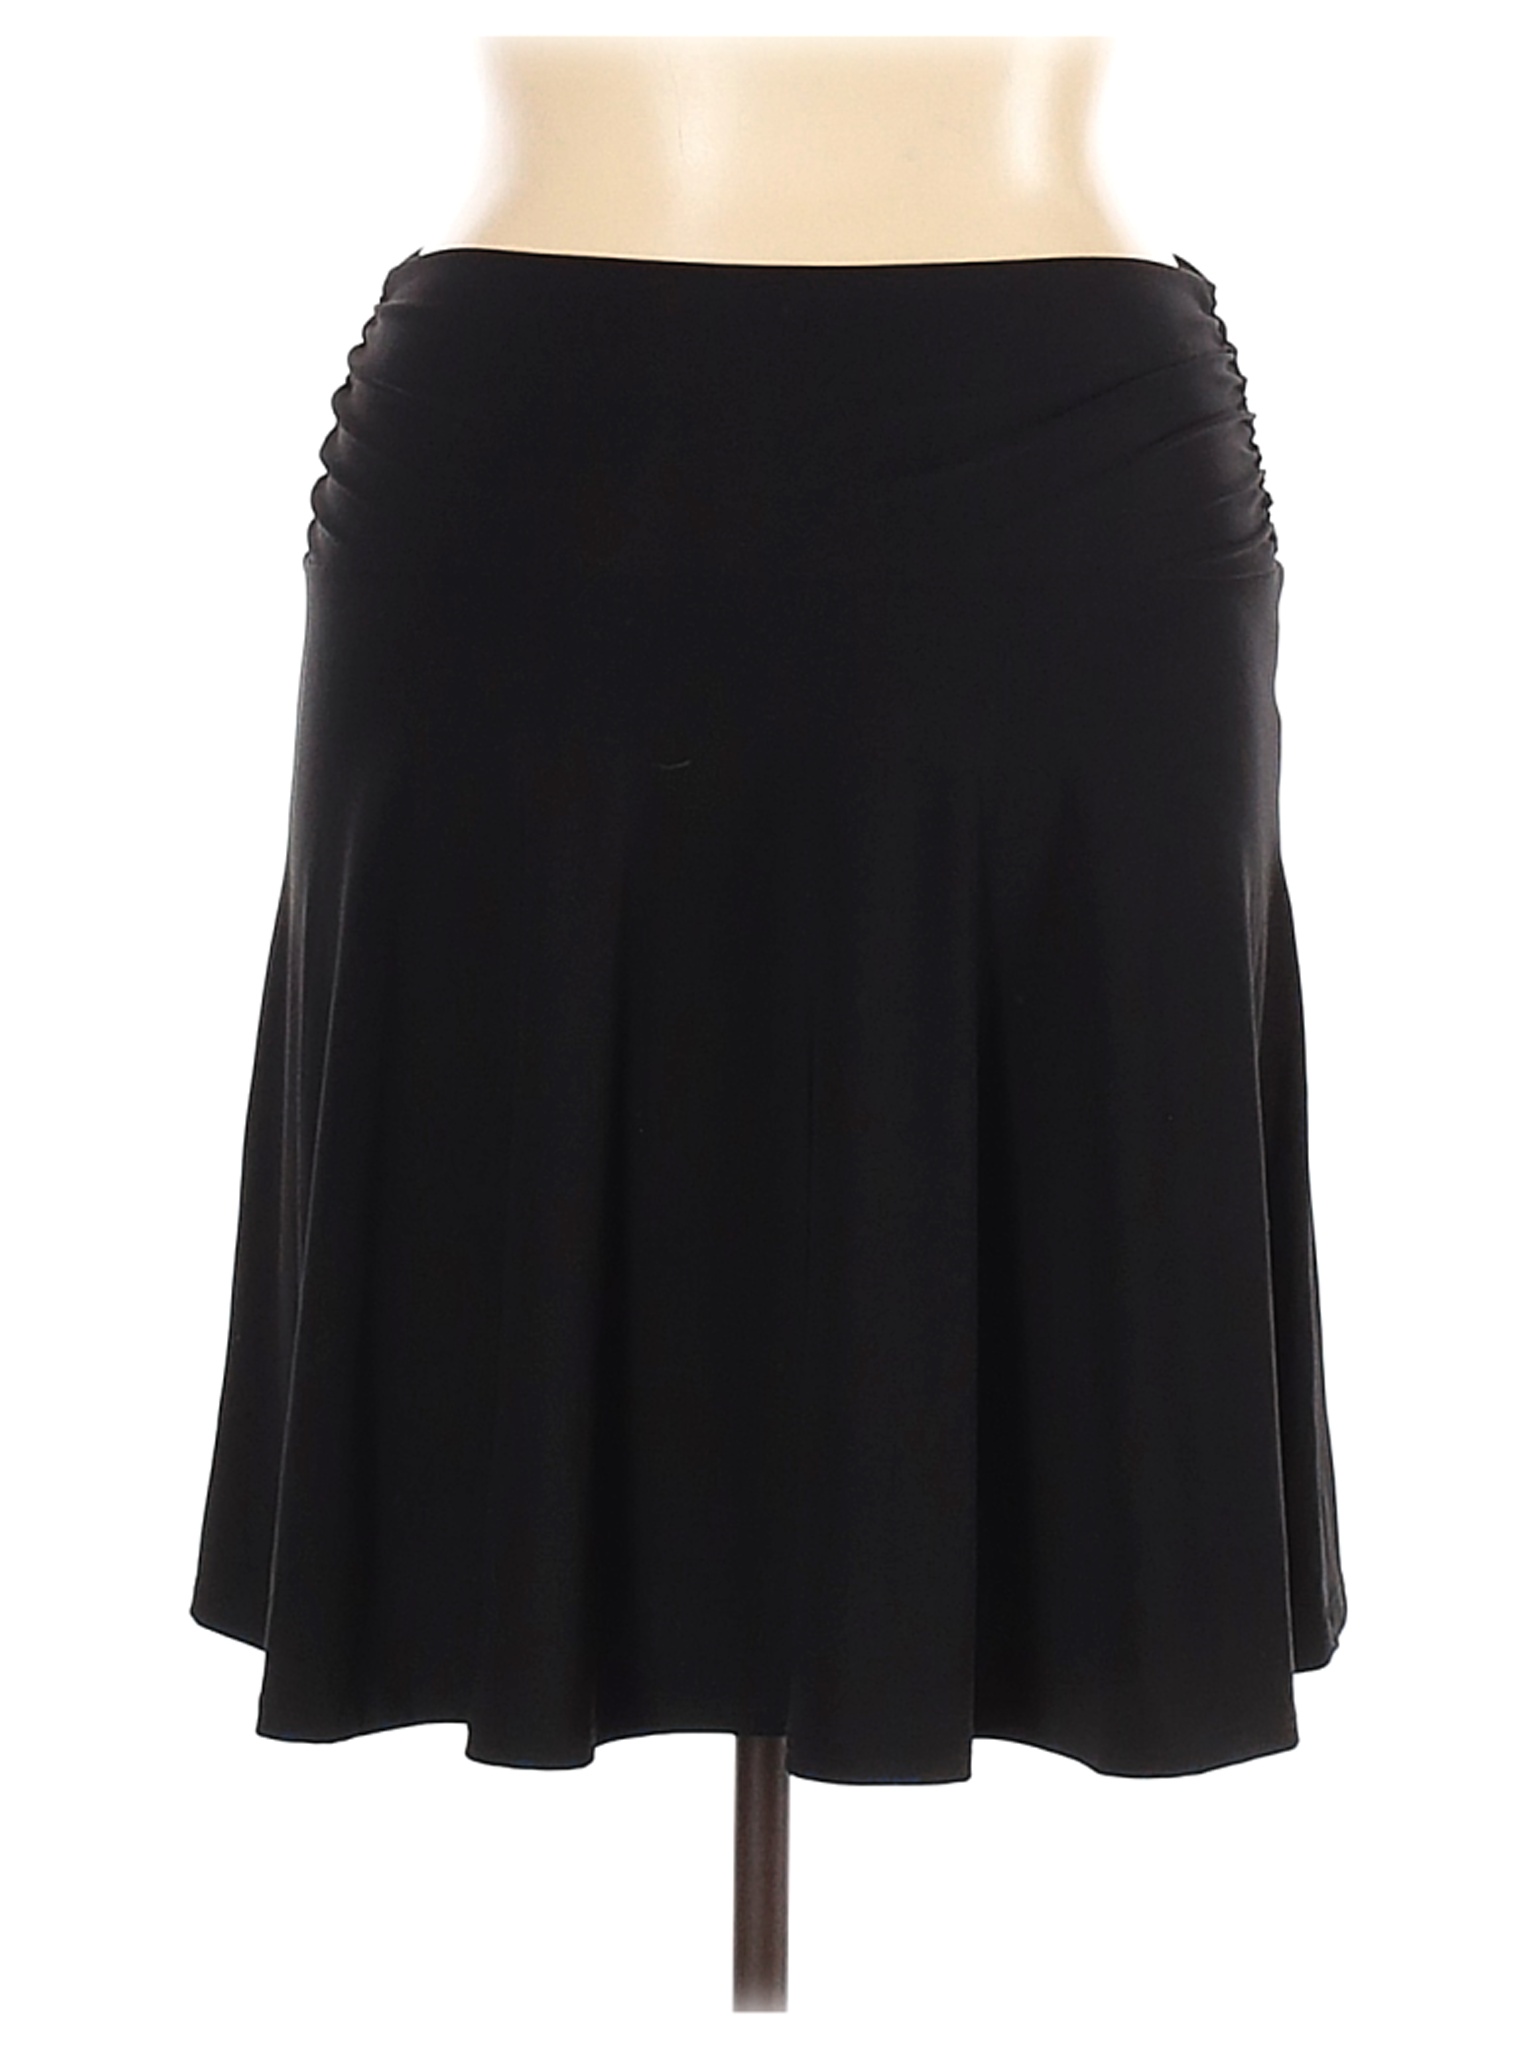 Maurices Women Black Casual Skirt XL | eBay